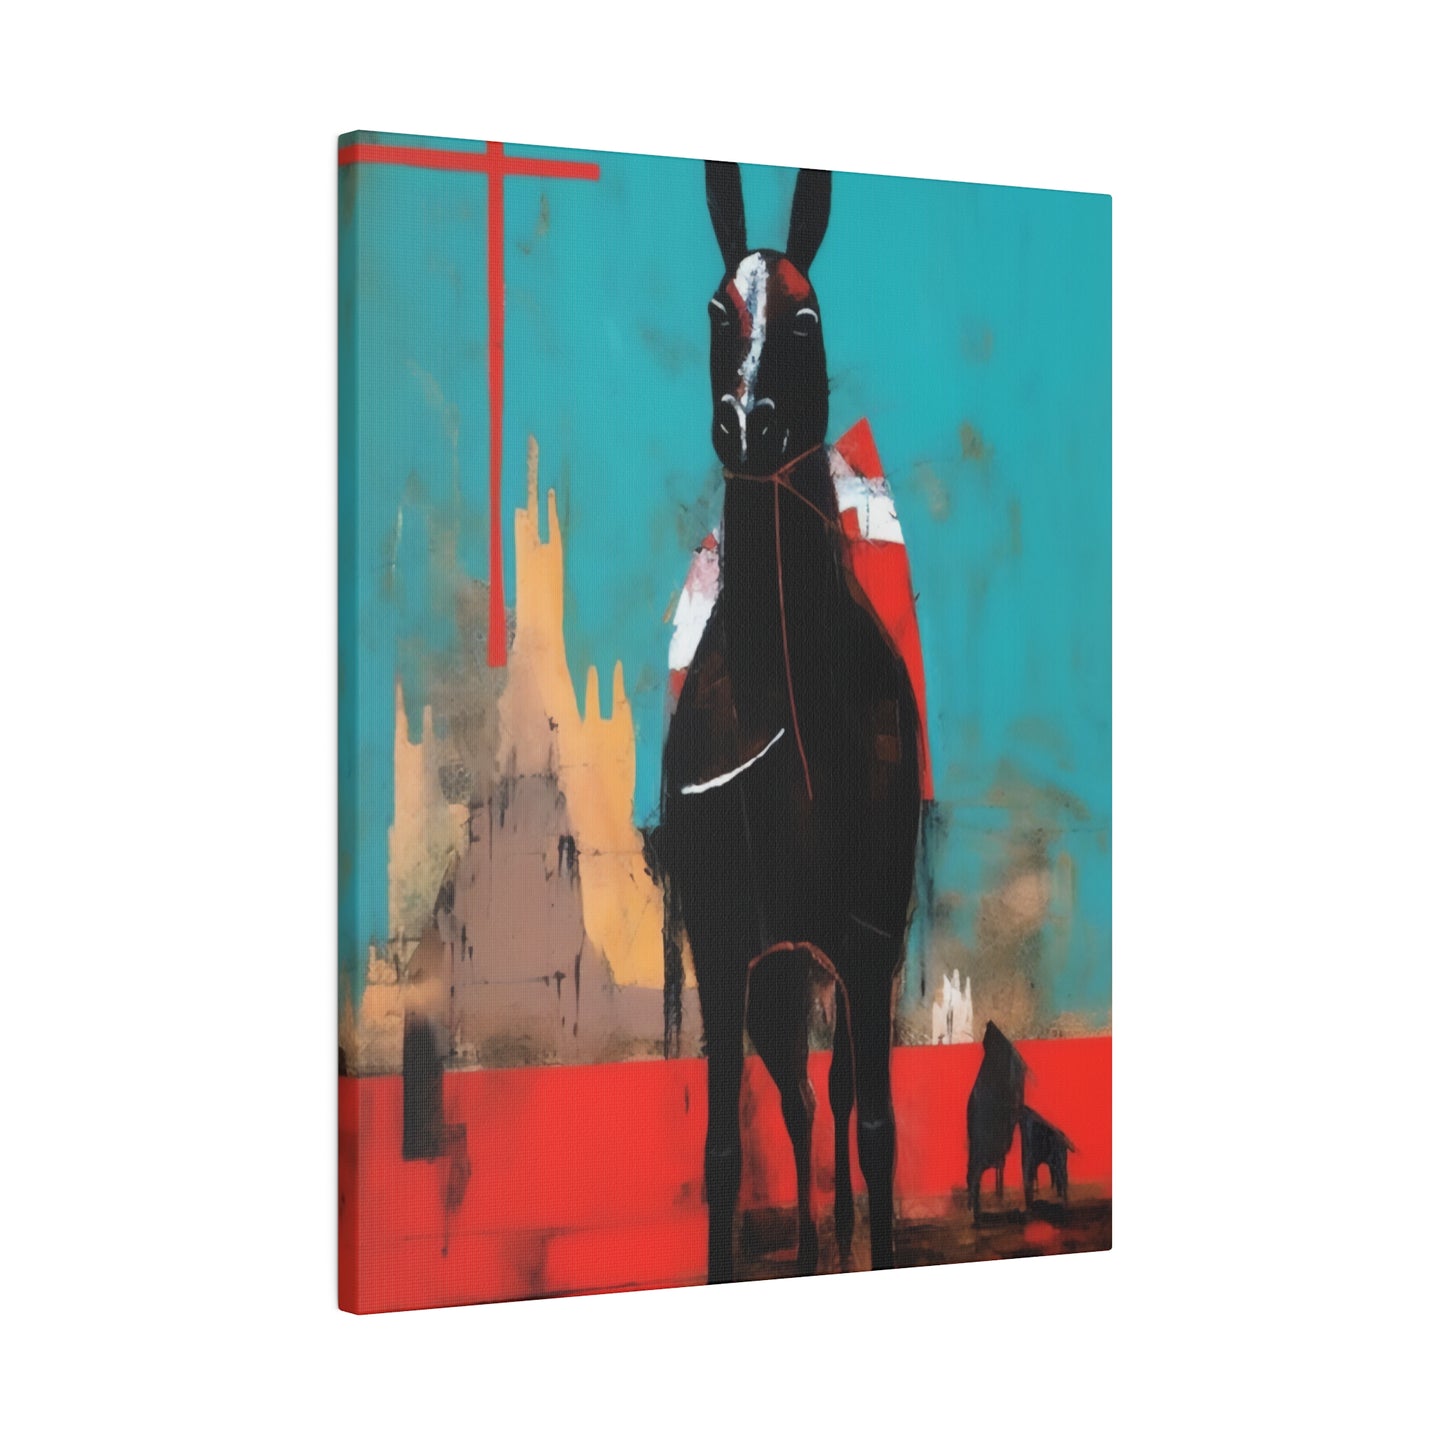 Rocinante Don Quixote's horse Pop Art | Stretched Canvas Print